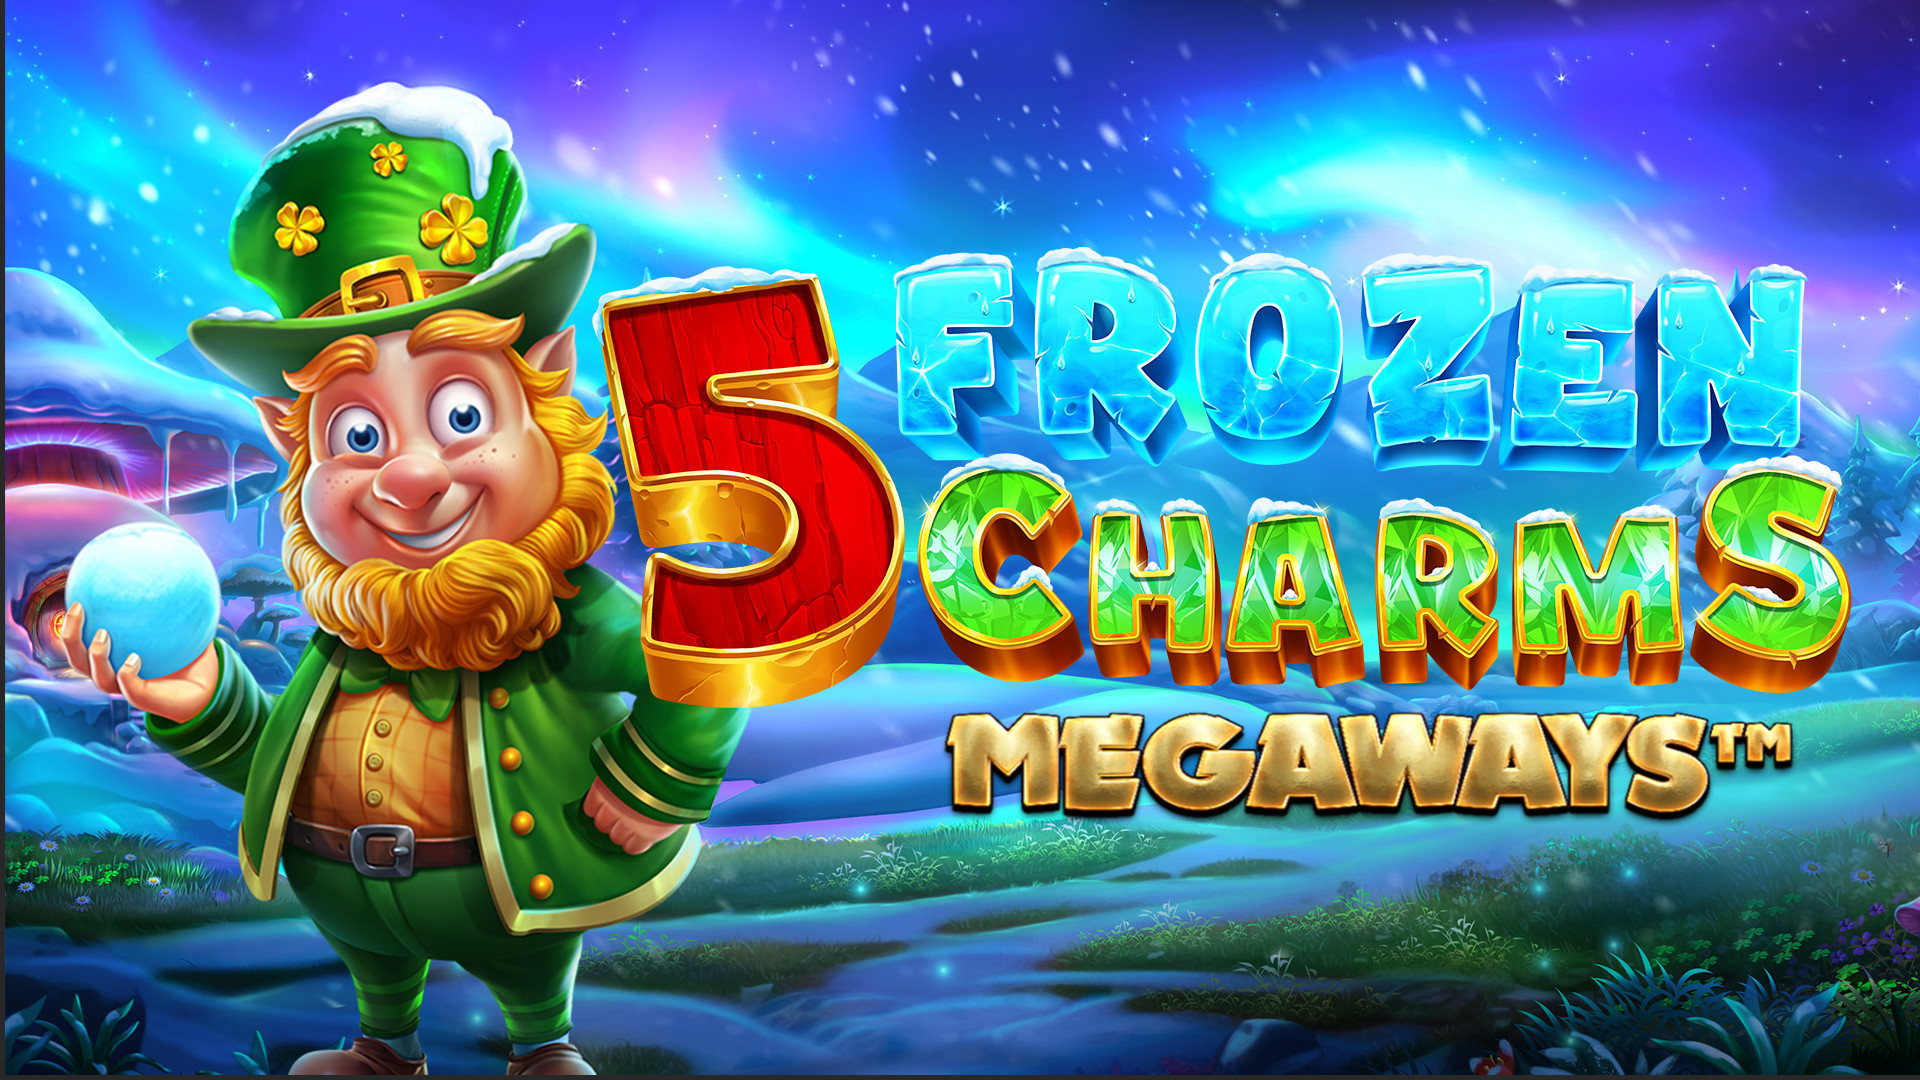 5 Frozen Charms MEGAWAYS